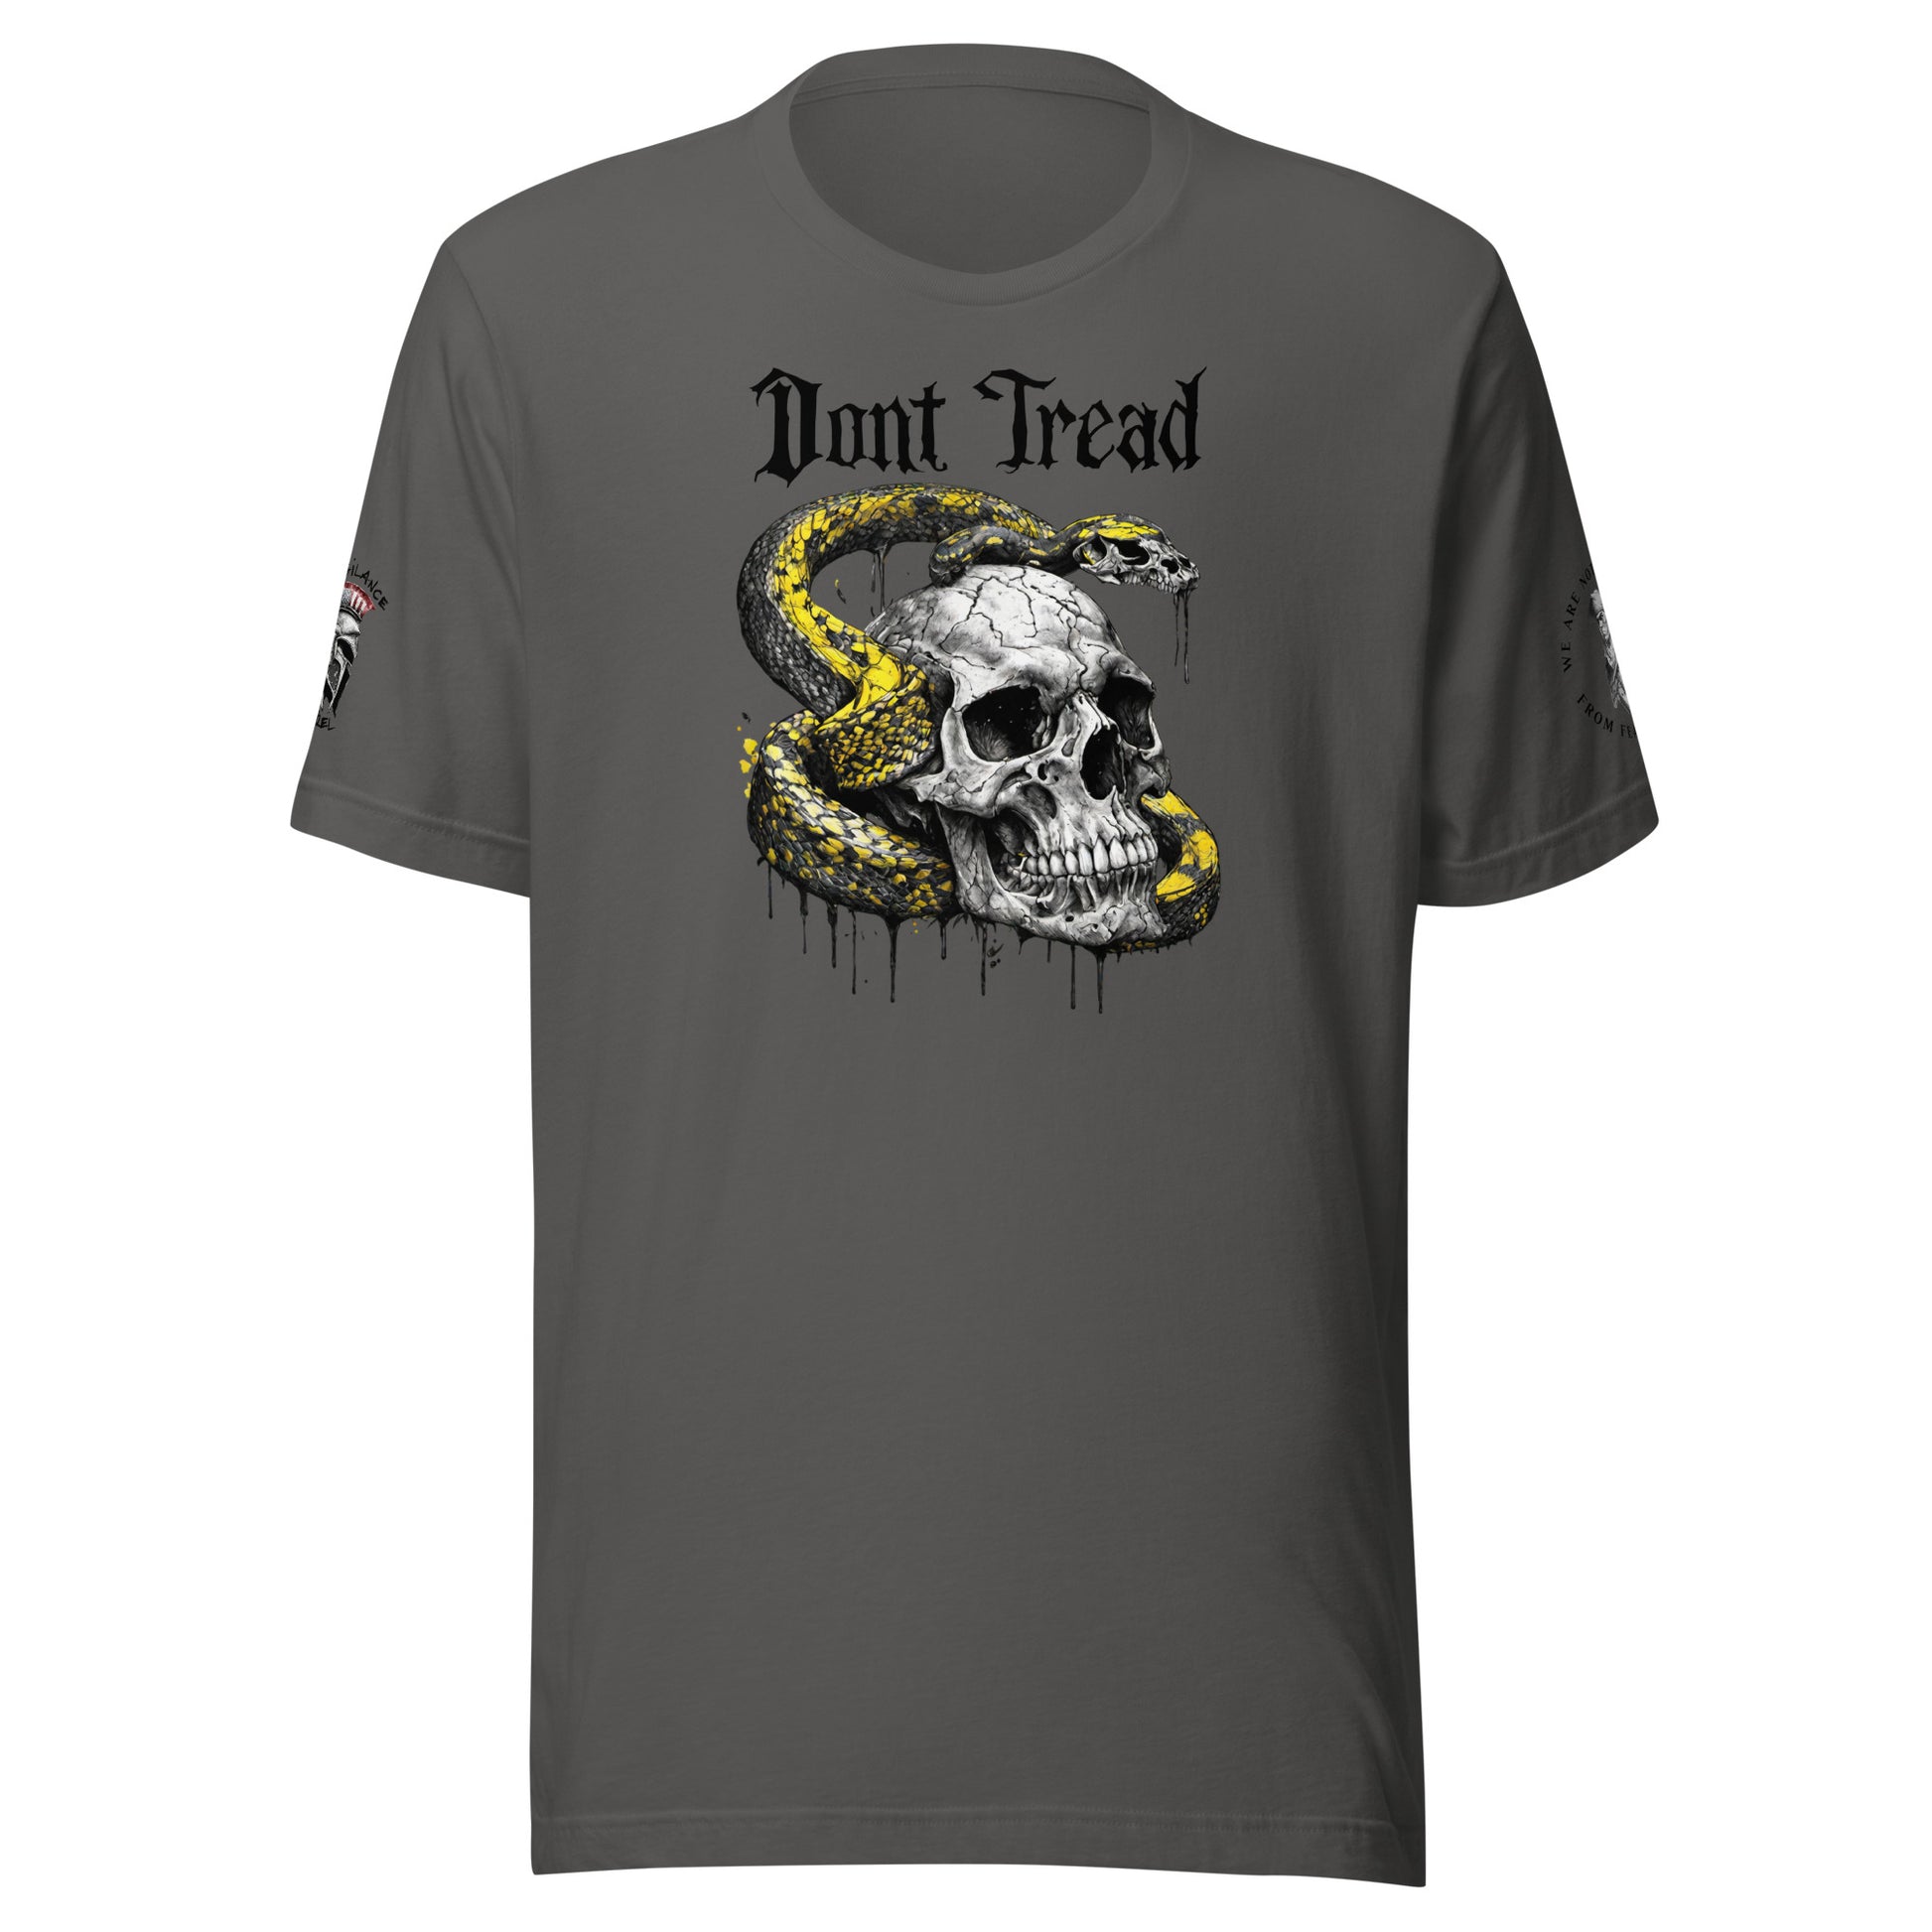 Don't Tread on Me Skull & Snake (logo & minuteman sleeve) Limited T-Shirt Asphalt